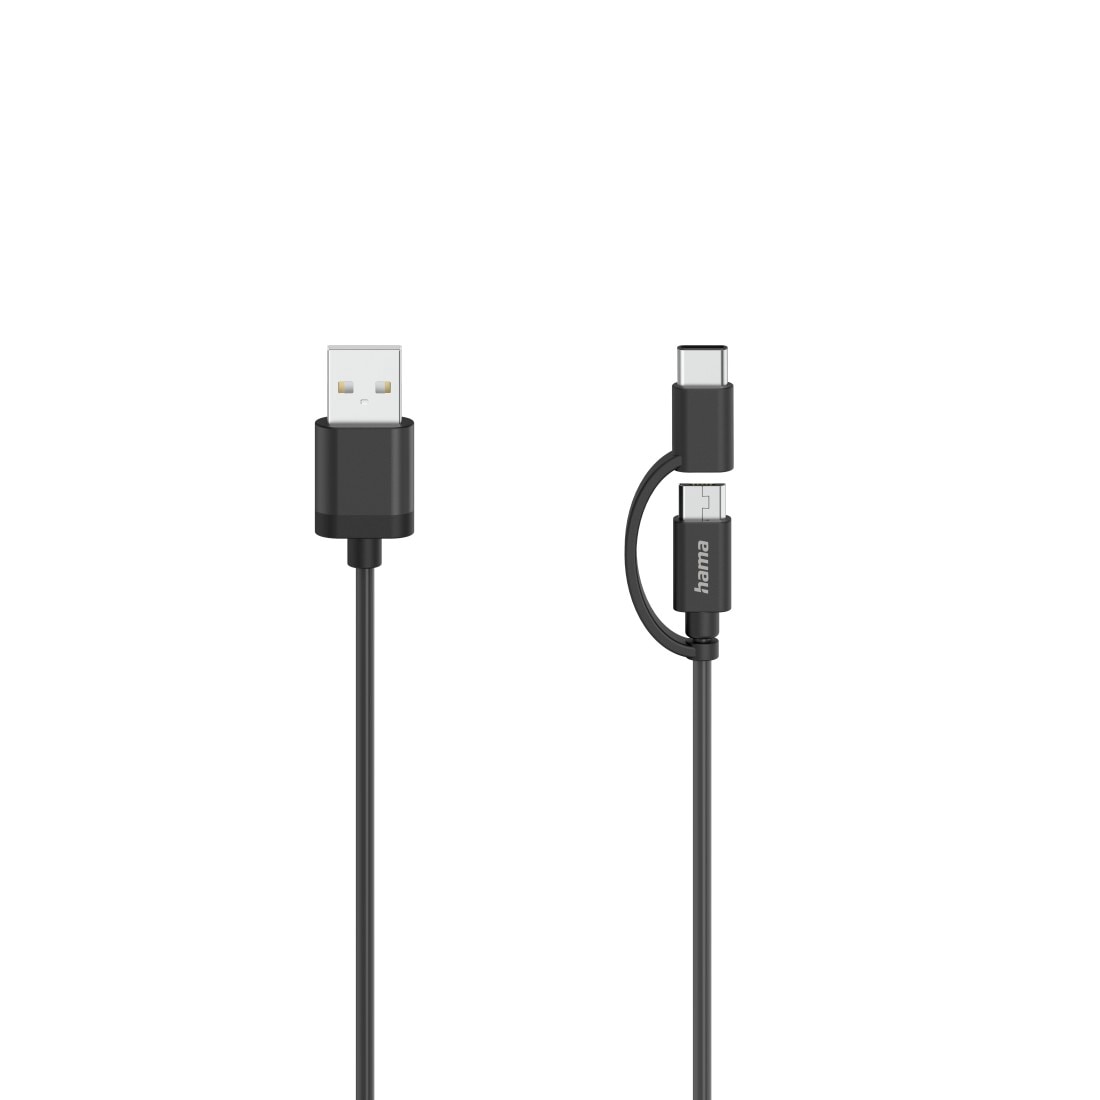 Hama USB-Kabel »Micro USB Kabel, 2in1, inkl. Adapter auf USB C